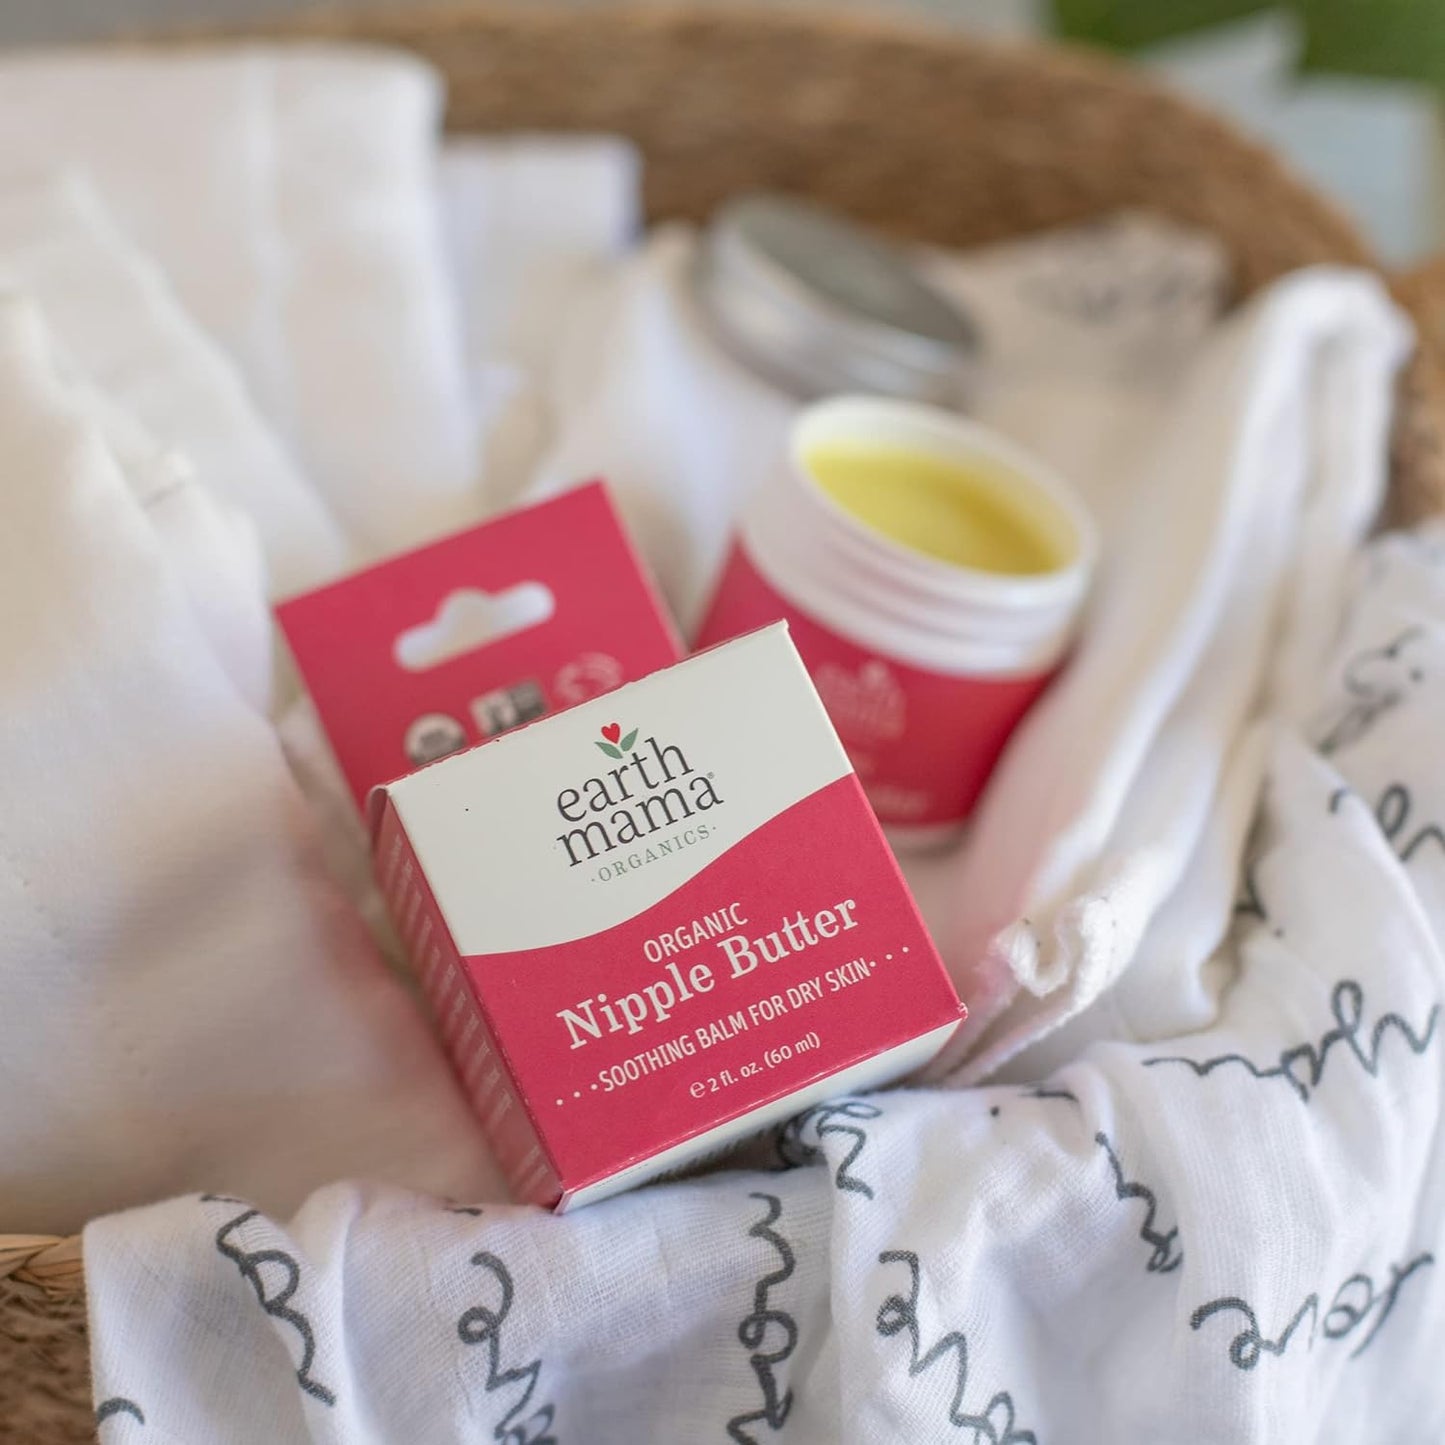 Organic Nipple Butter™ Breastfeeding Cream by Earth Mama | Lanolin-free, Postpartum Essentials Safe for Nursing, Non-GMO Project Verified, 2-Fluid Ounce